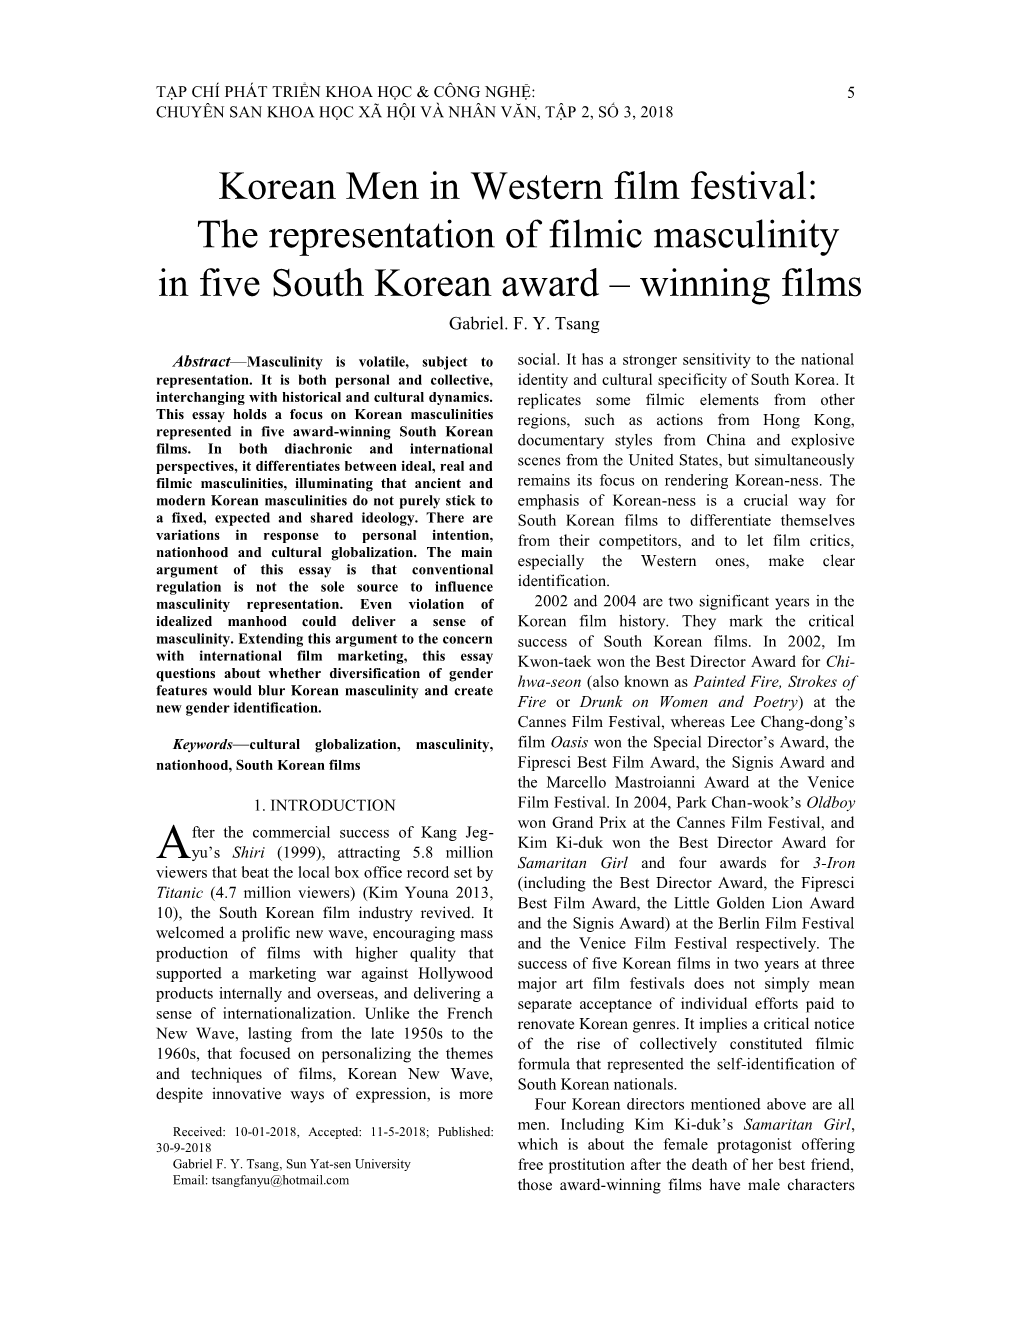 The Representation of Filmic Masculinity in Five South Korean Award – Winning Films Gabriel